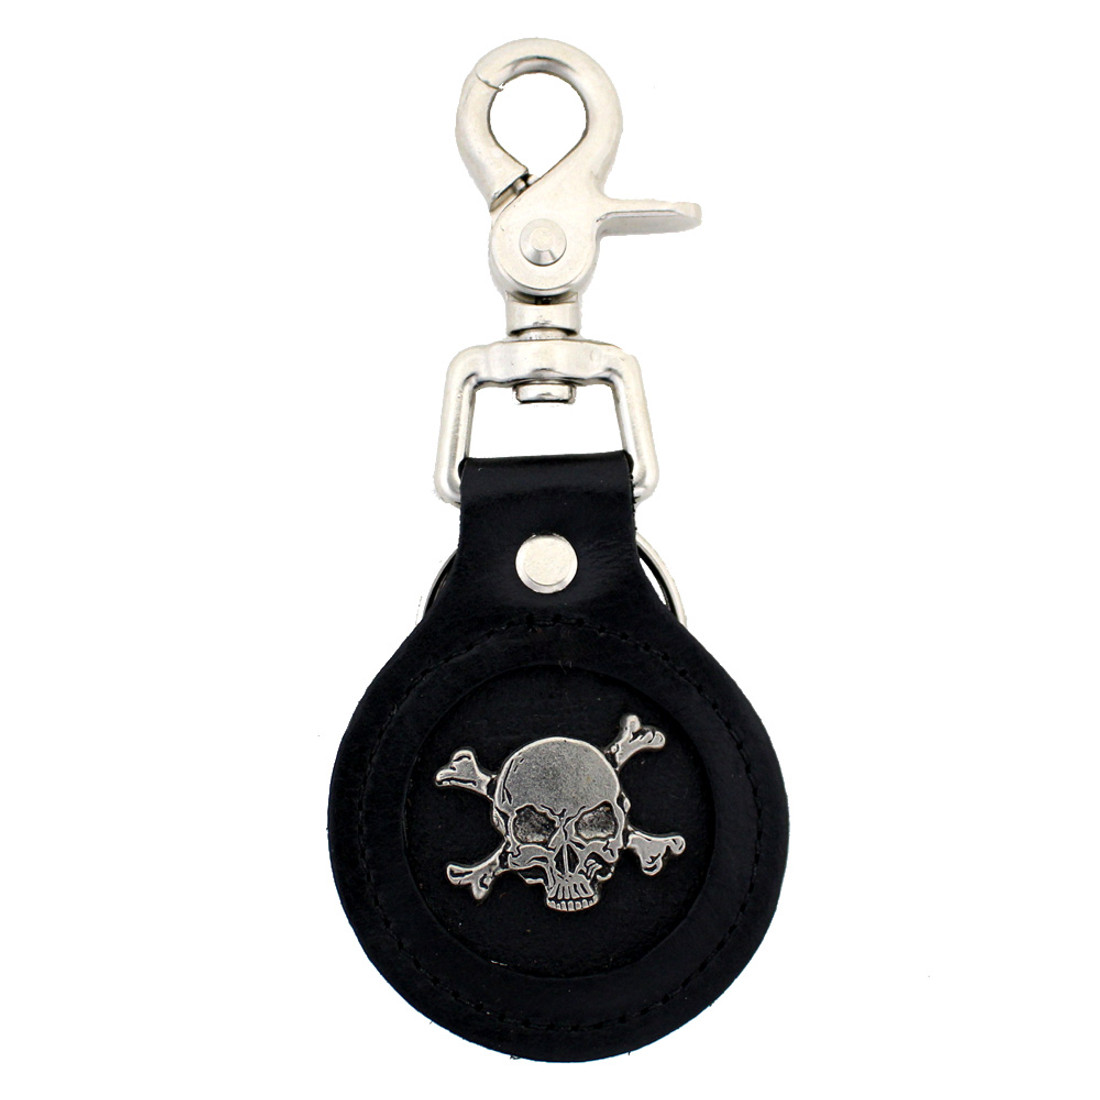 Black leather skull and crossbones key chain.